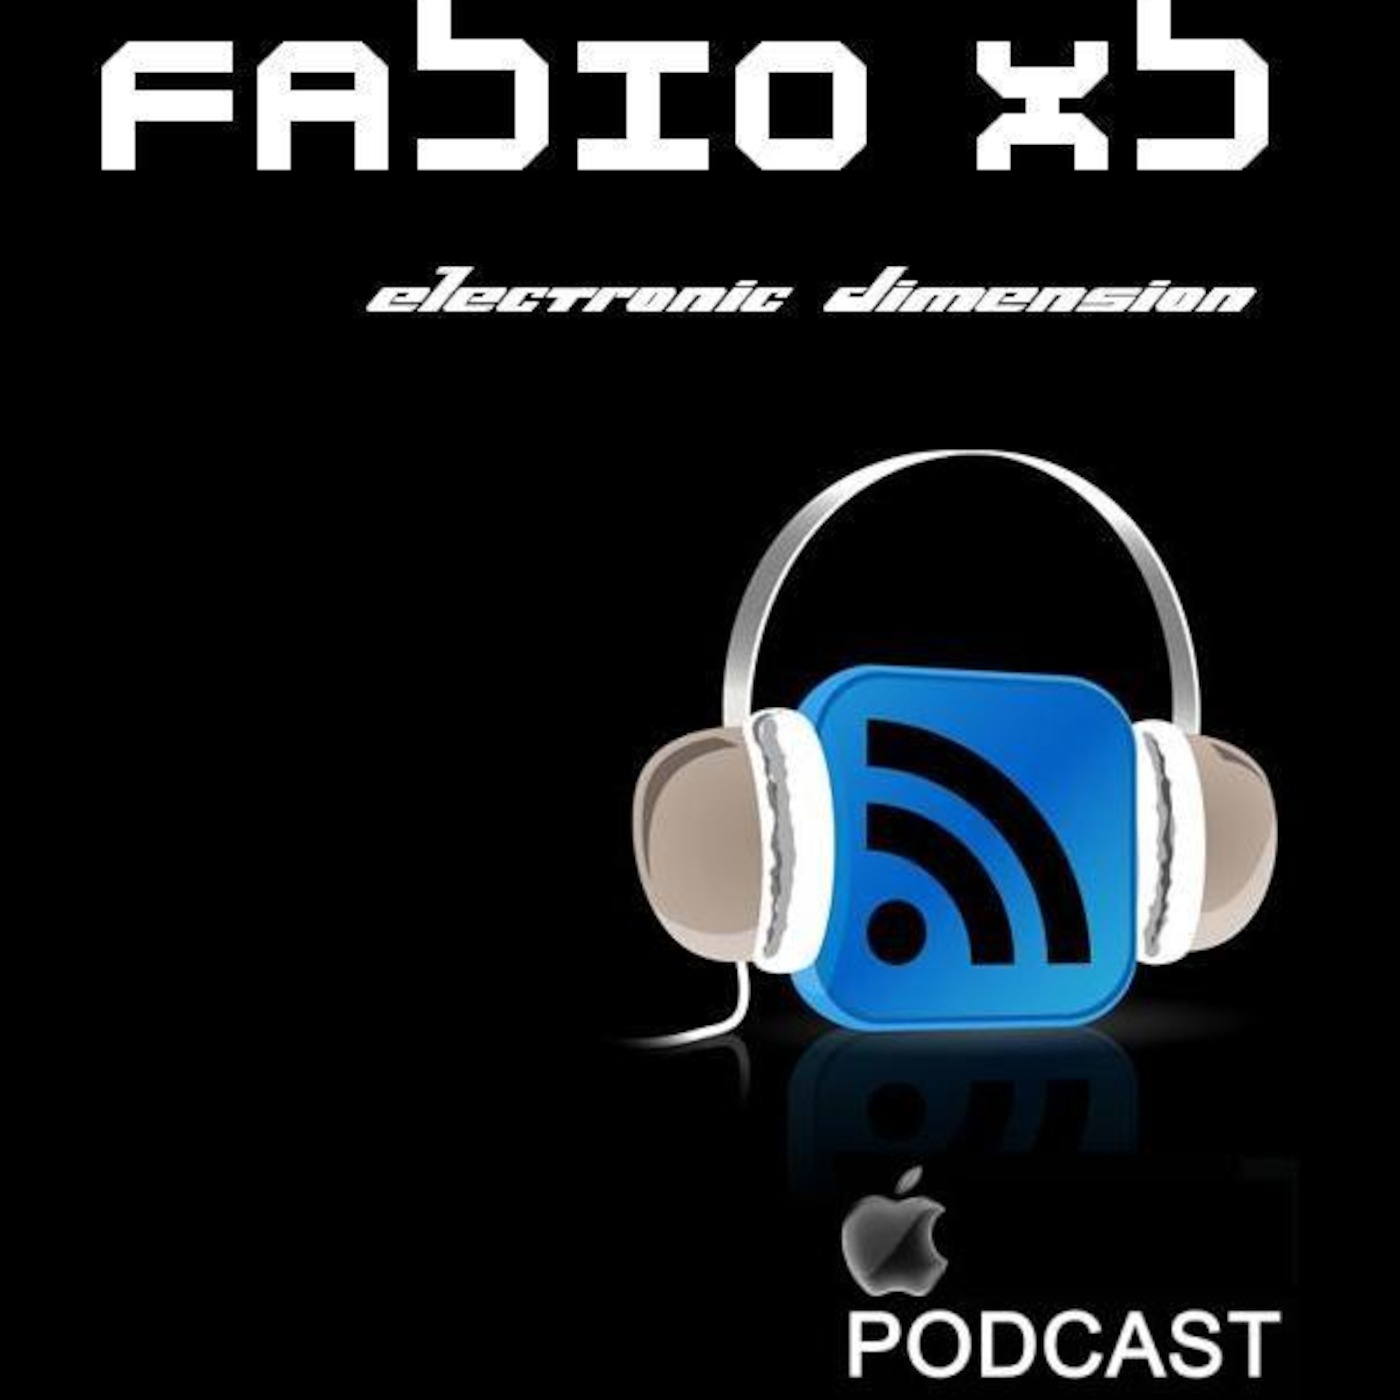 Fabio XB "Electronic Dimension" Podcast